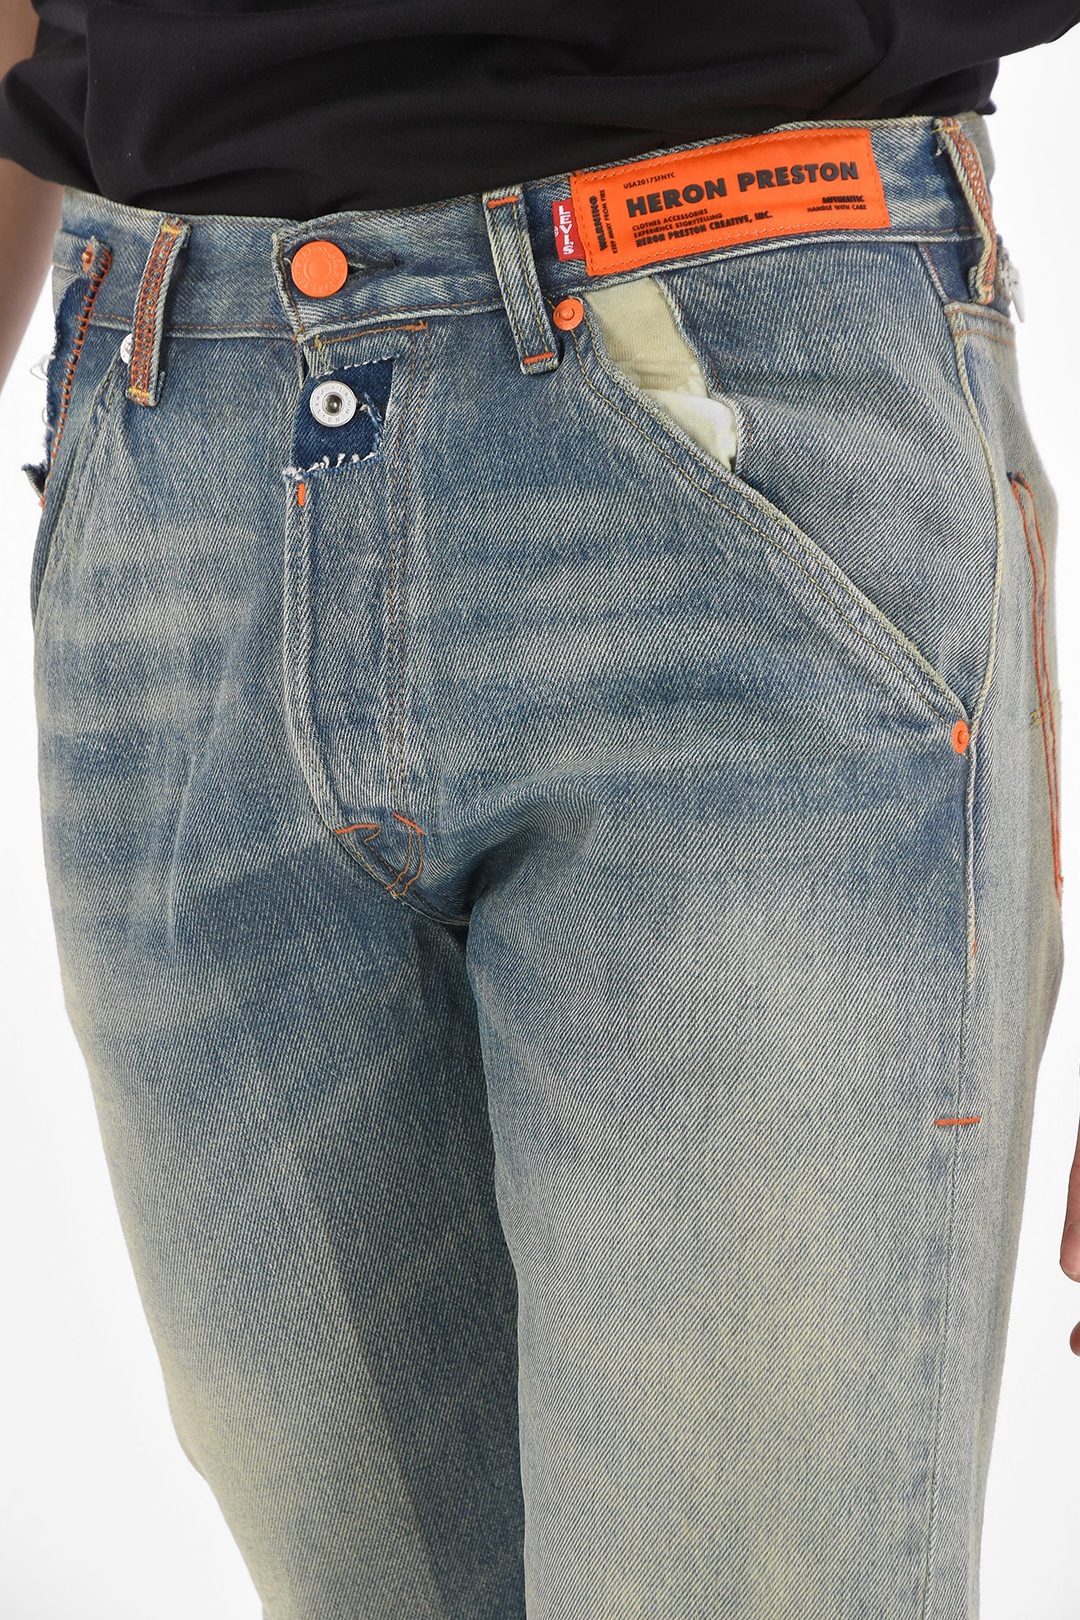 Heron Preston LEVI'S  stone washed 501 jeans  men - Glamood Outlet